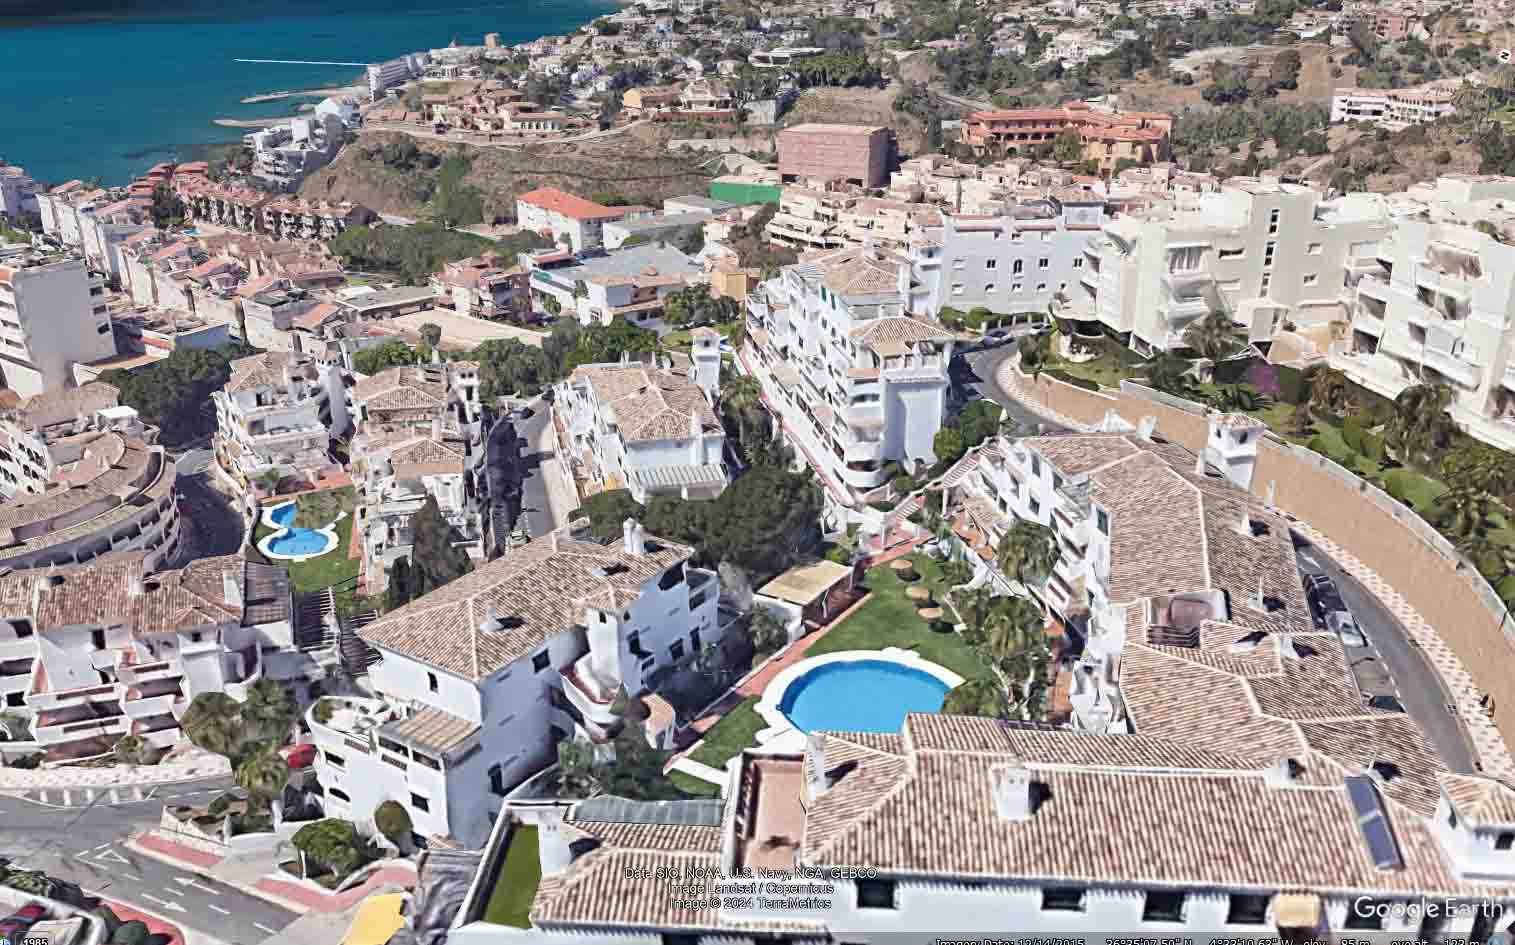 birds eye view showing urbanisation ofPueblo Torrequebrada where we offer a comprehensive range of property for sale